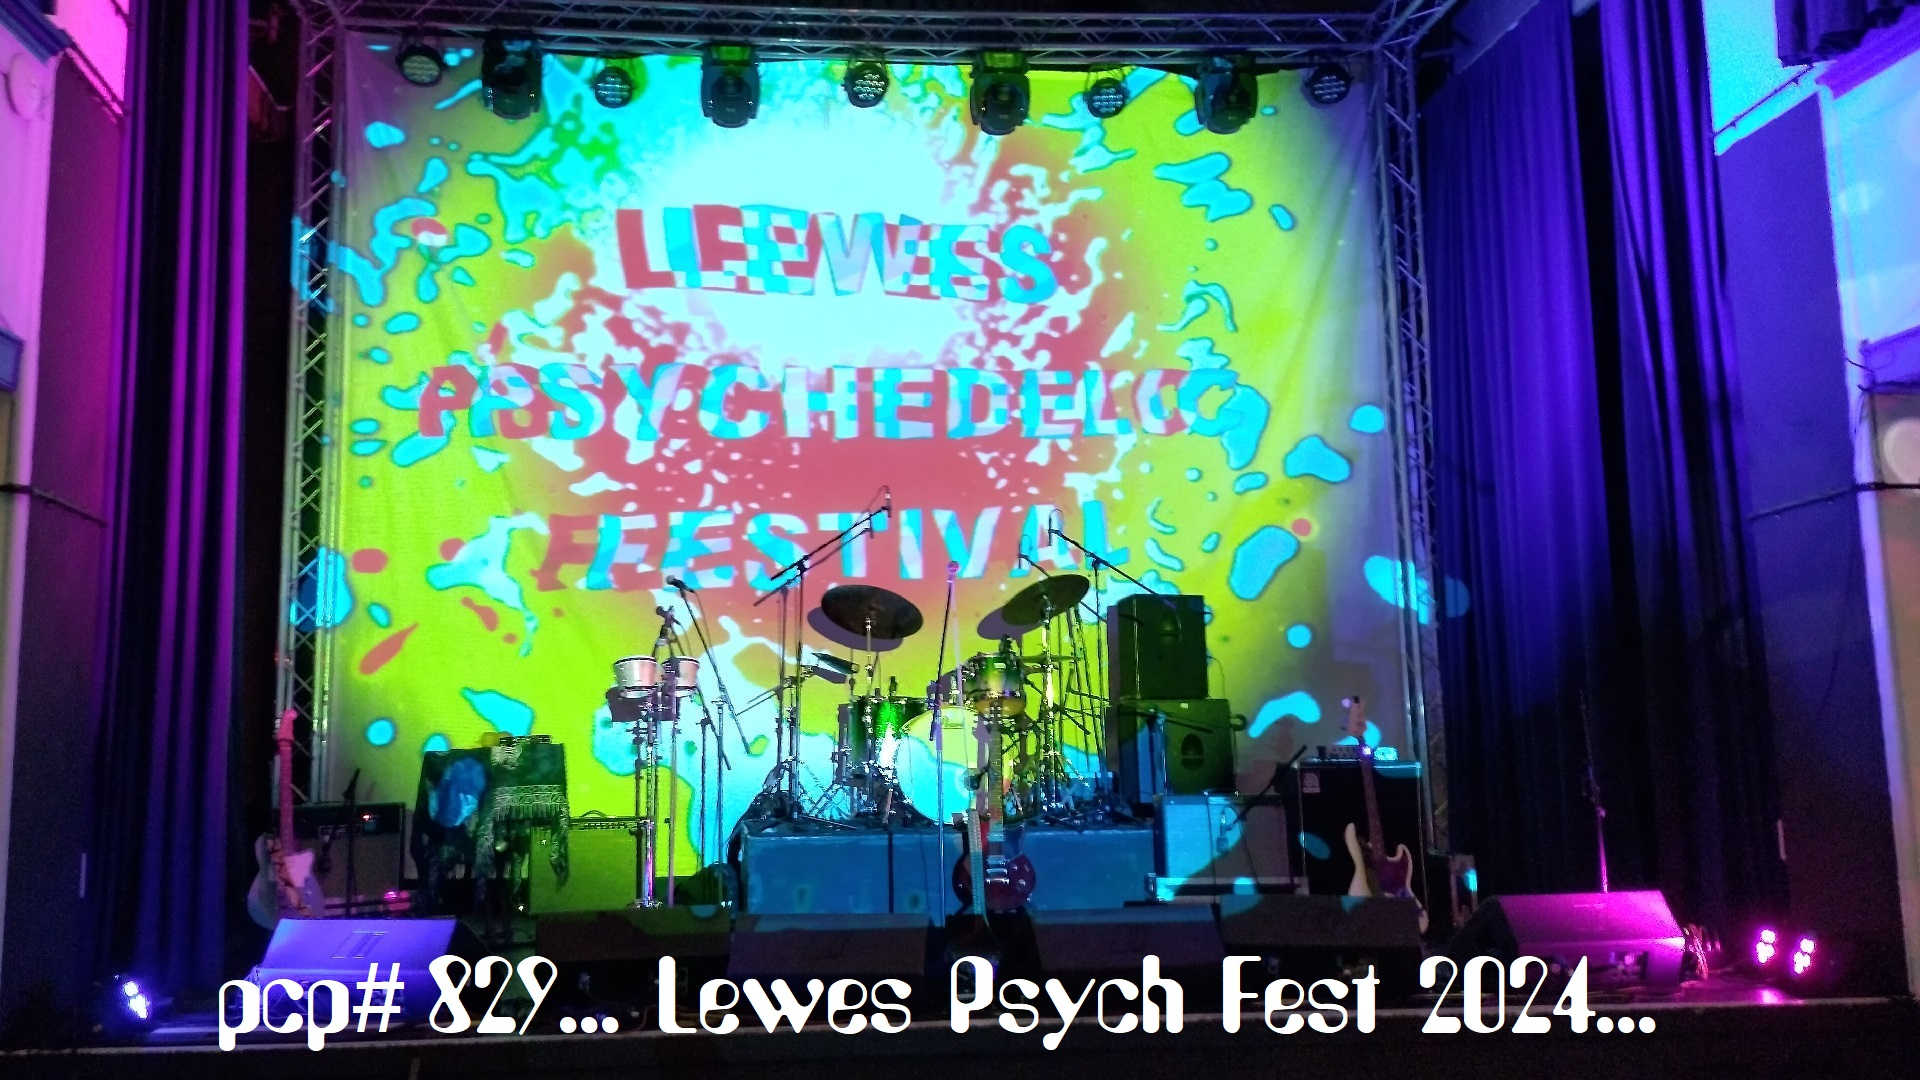 PCP#829... Lewes Psych Fest 2024...